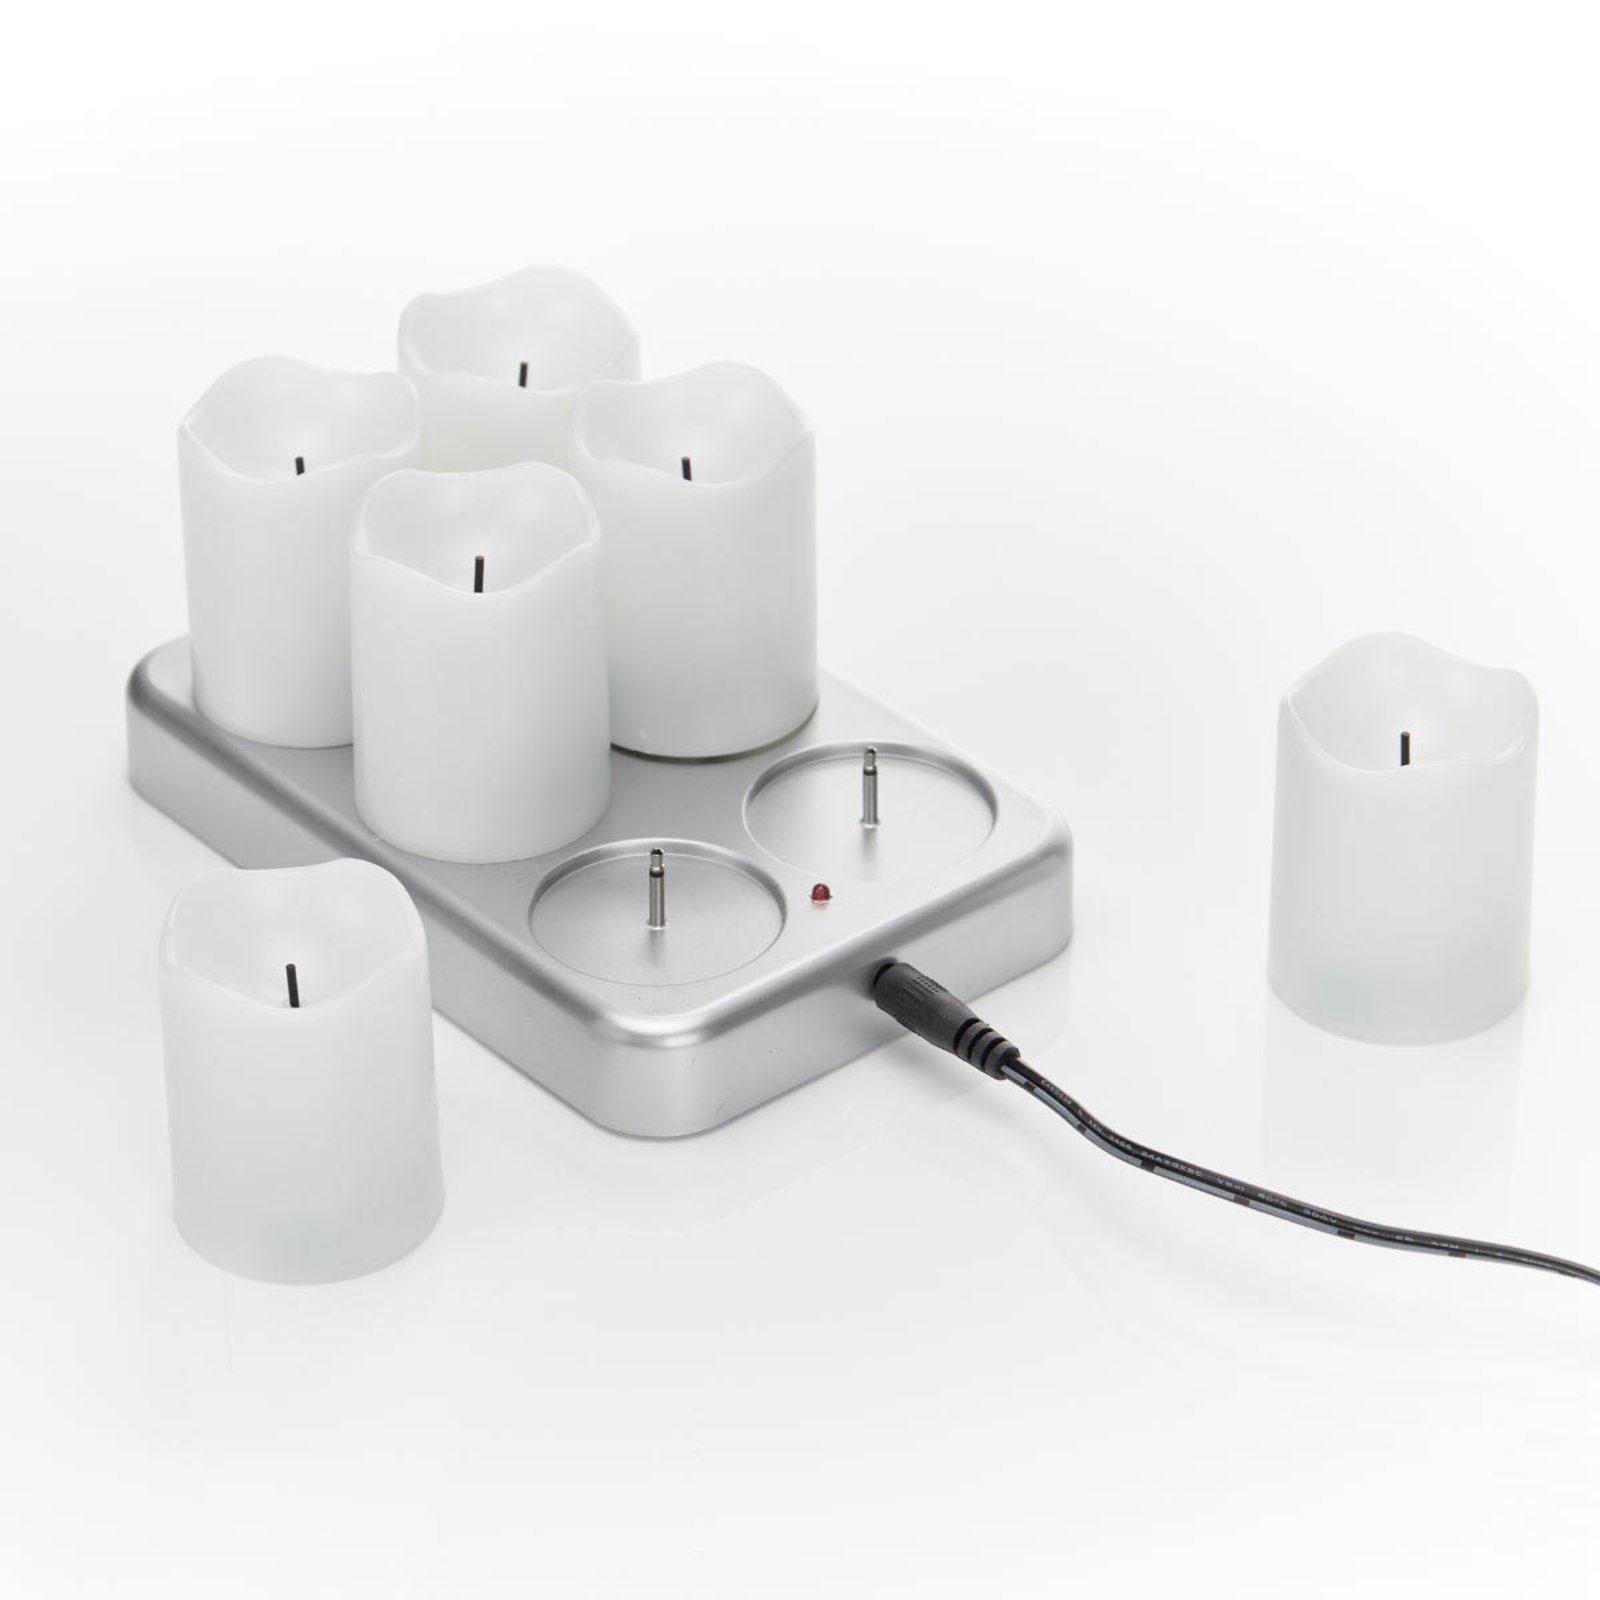 Bemiddelaar Umeki Moreel Heroplaadbare LED theelichtje Chargeme, 6 stuks | Lampen24.nl